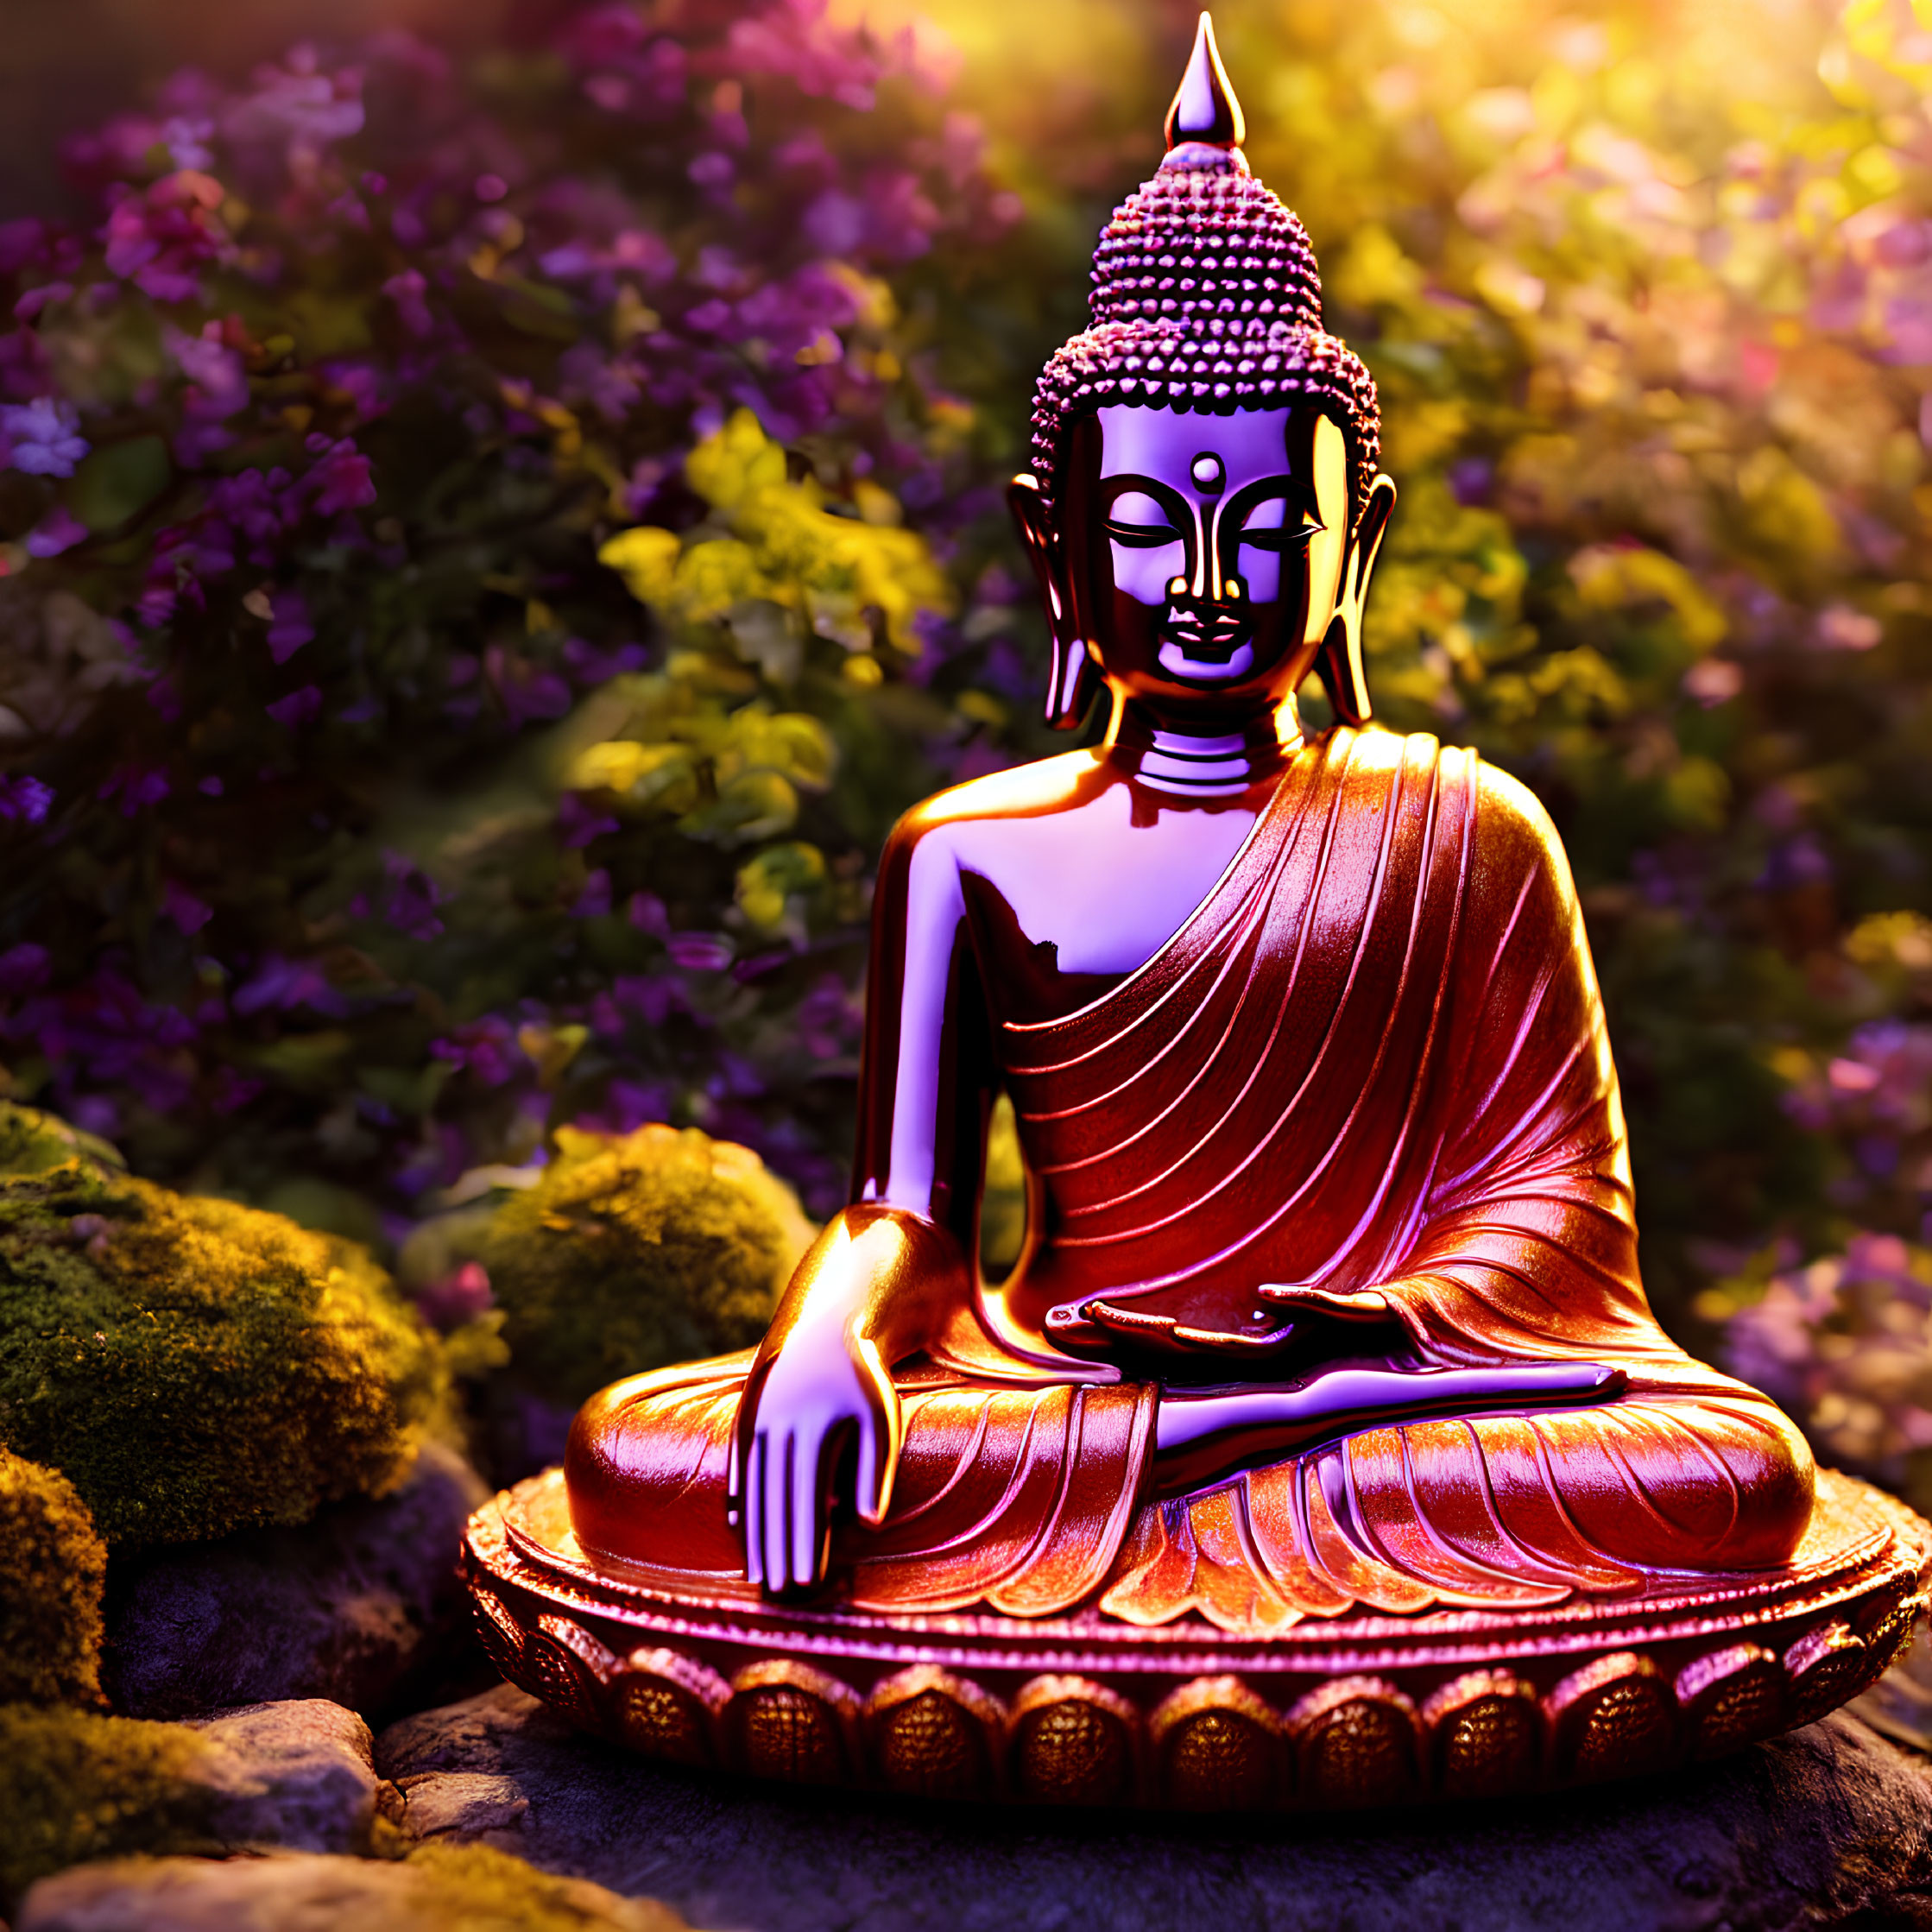 Purple Buddha Statue Meditating in Orange Drapes Amid Flower Garden